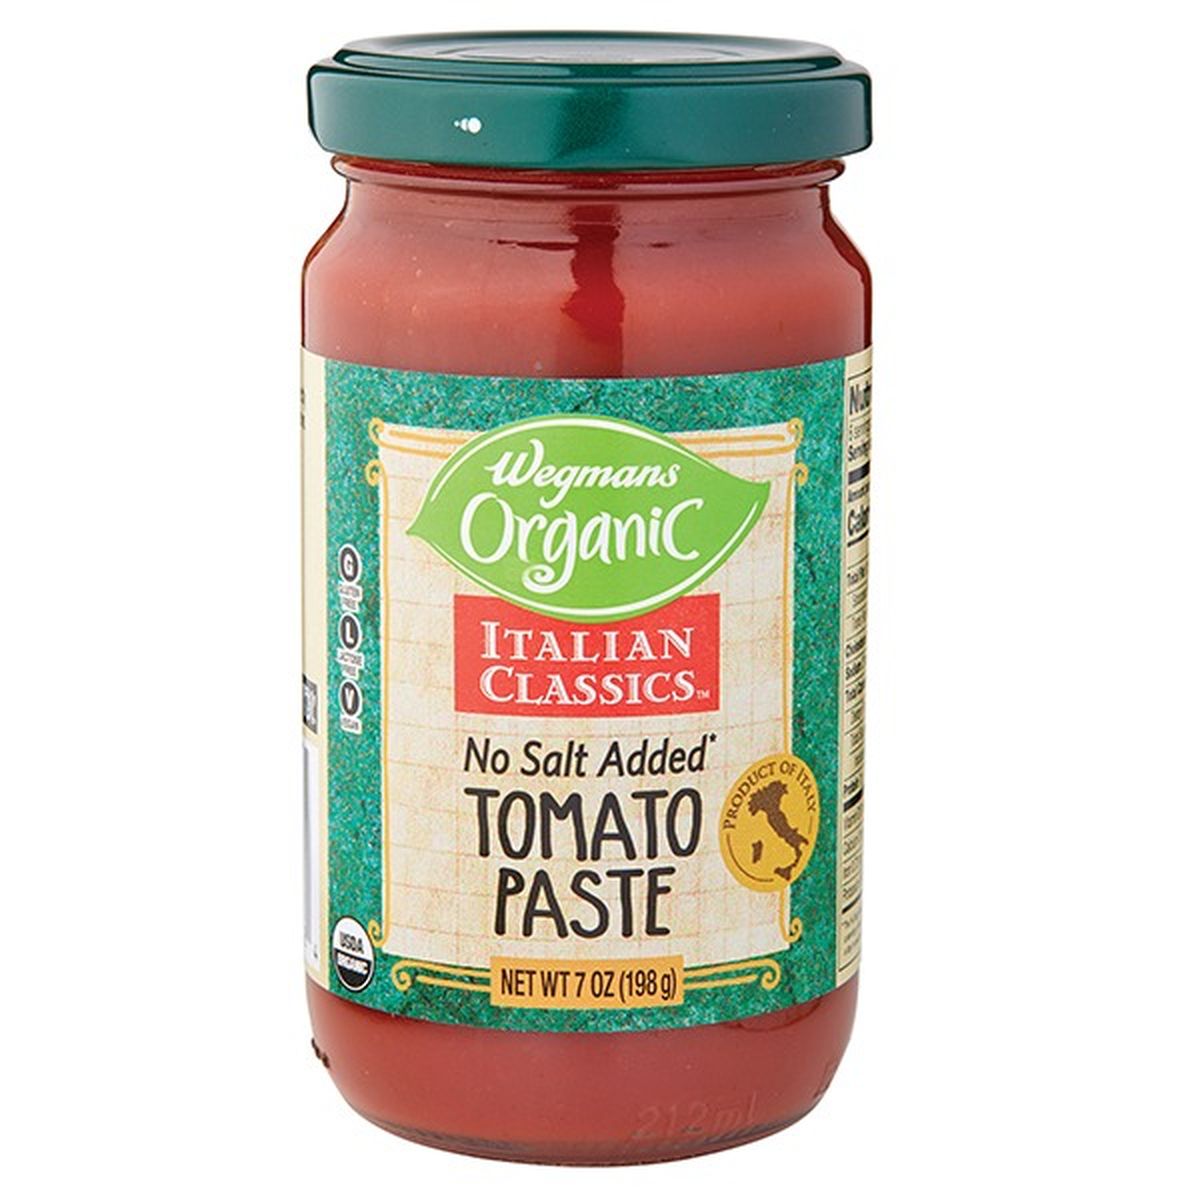 Calories in Wegmans Italian Classics Organic No Salt Added Tomato Paste